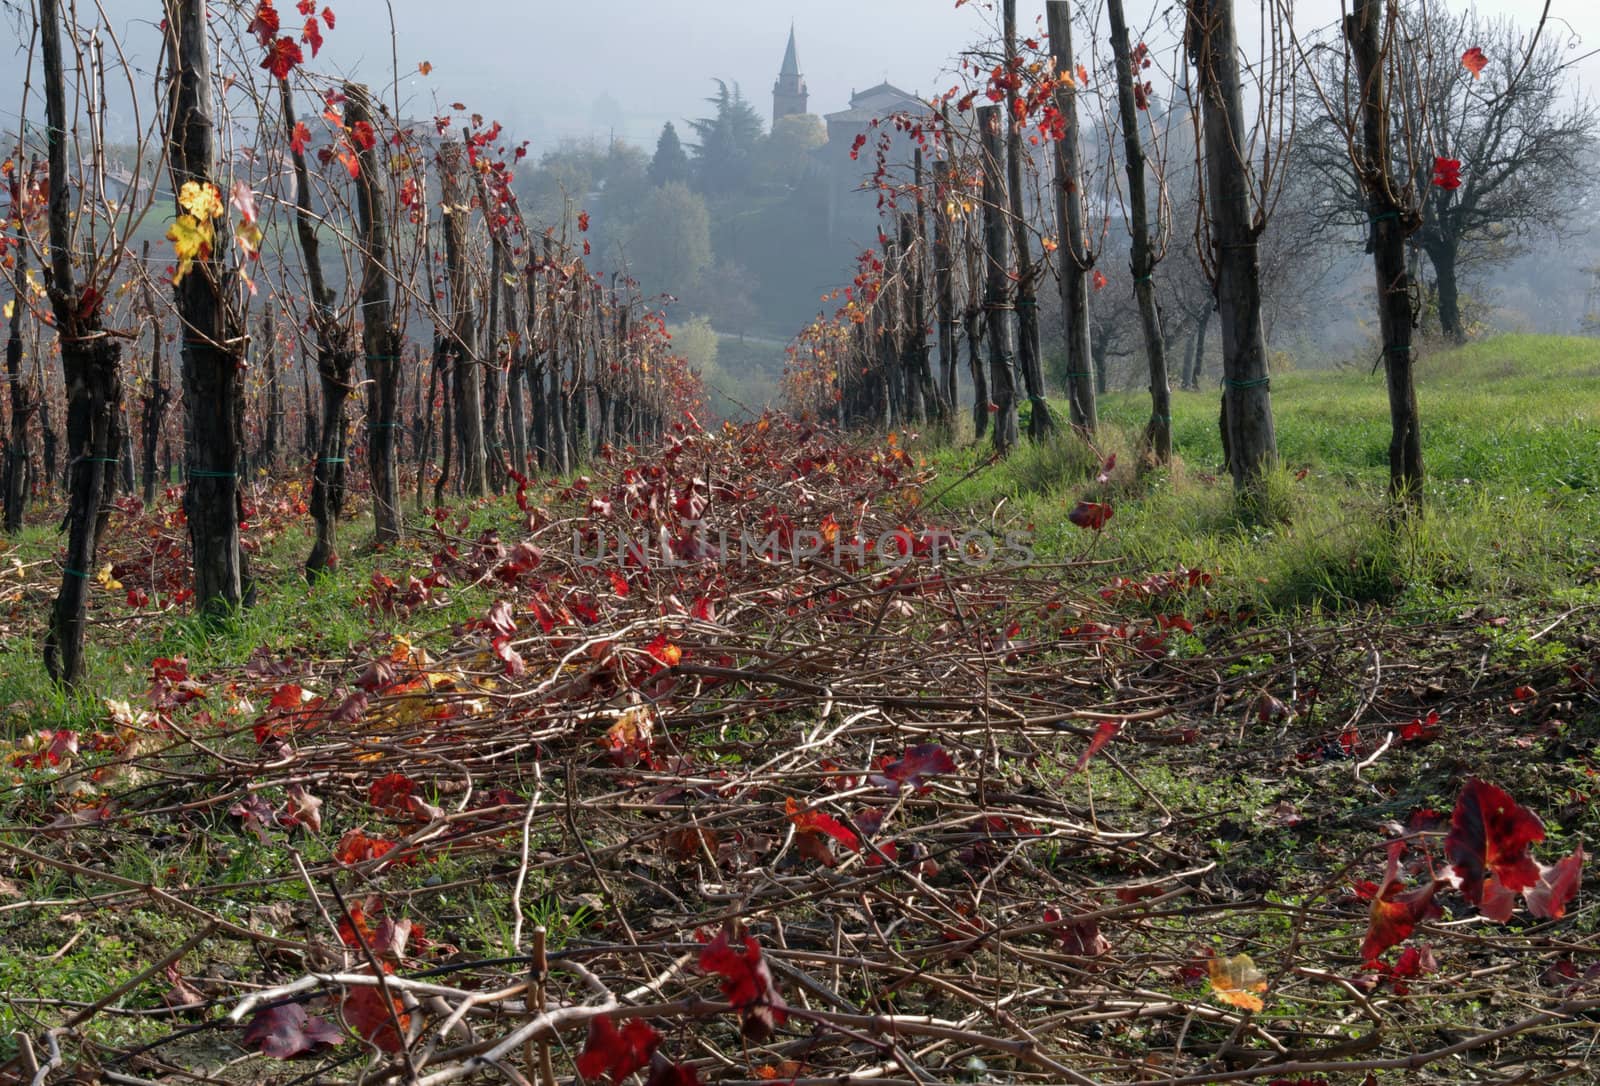 Vine Yard In Autumn by baggiovara